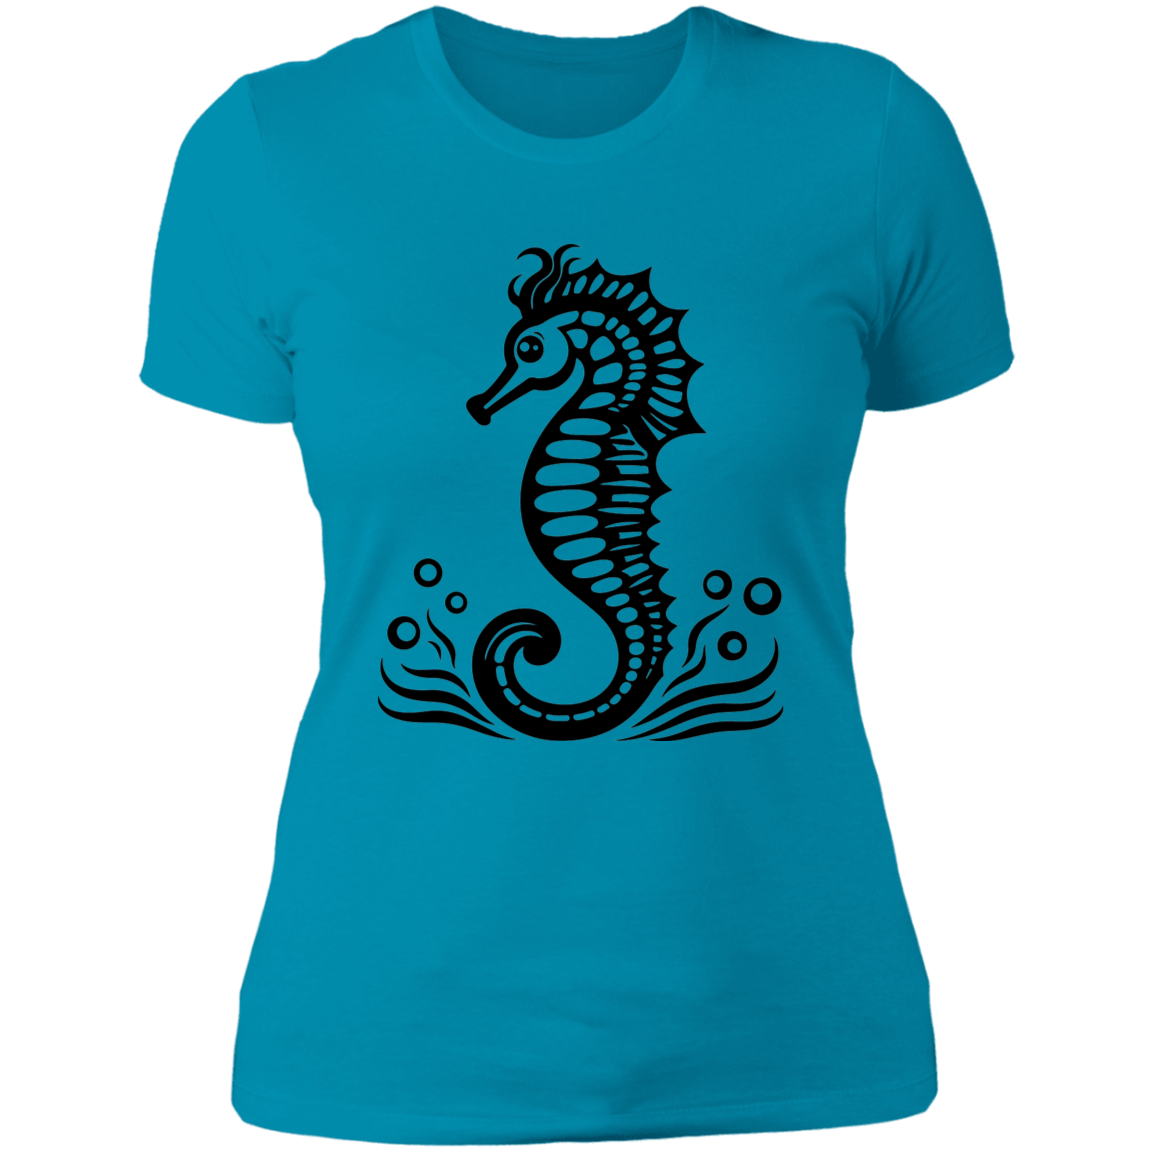 Seahorse Ladies' Boyfriend T-Shirt